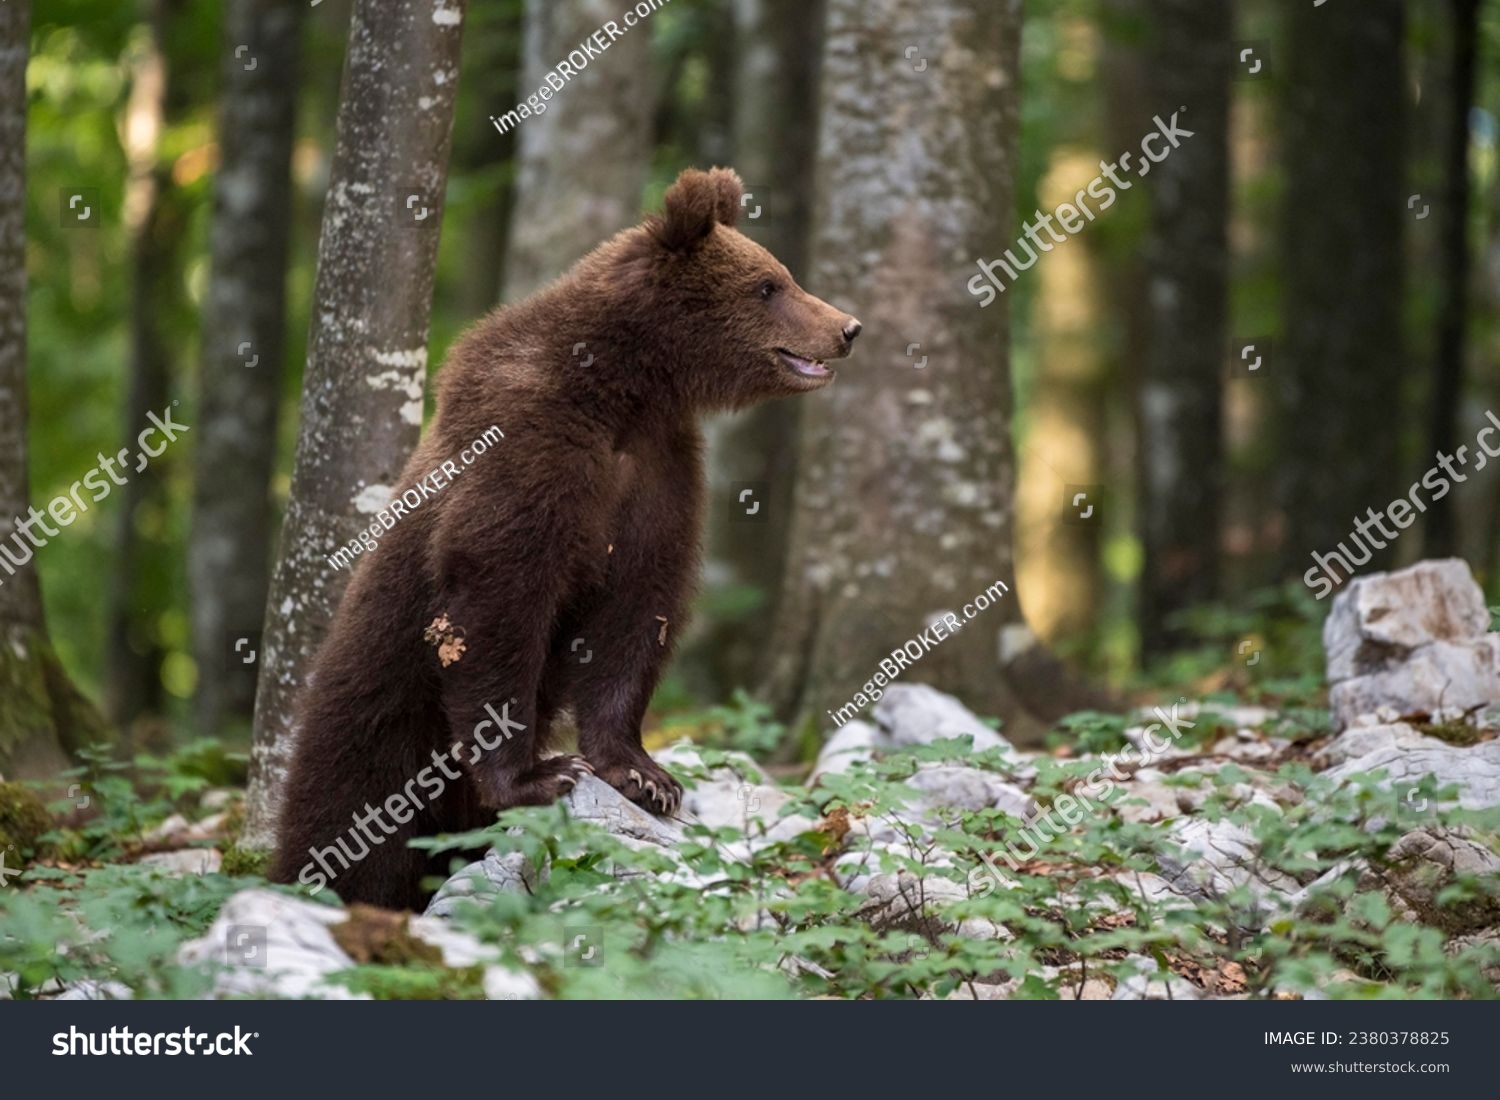 European brown bear (Ursus arctos arctos) upright in forest, Notranjska region, Dinaric Alps, Slovenia #2380378825